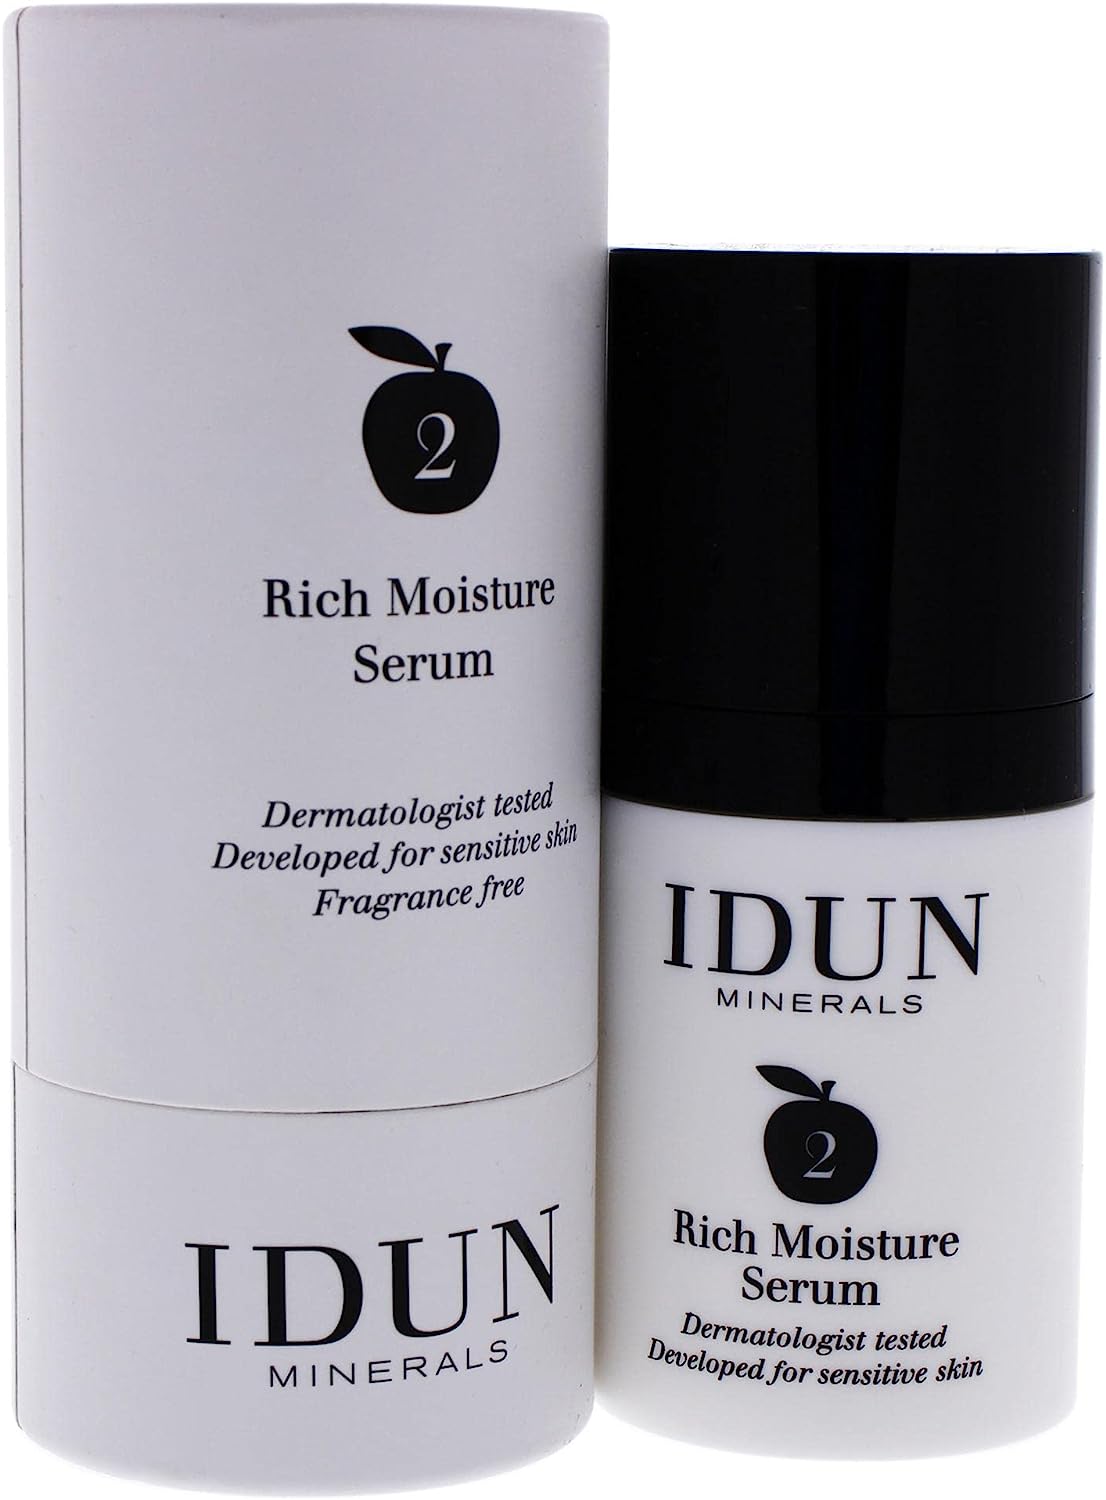 IDUN MINERALS - Rich Moisture Serum - 30 ml